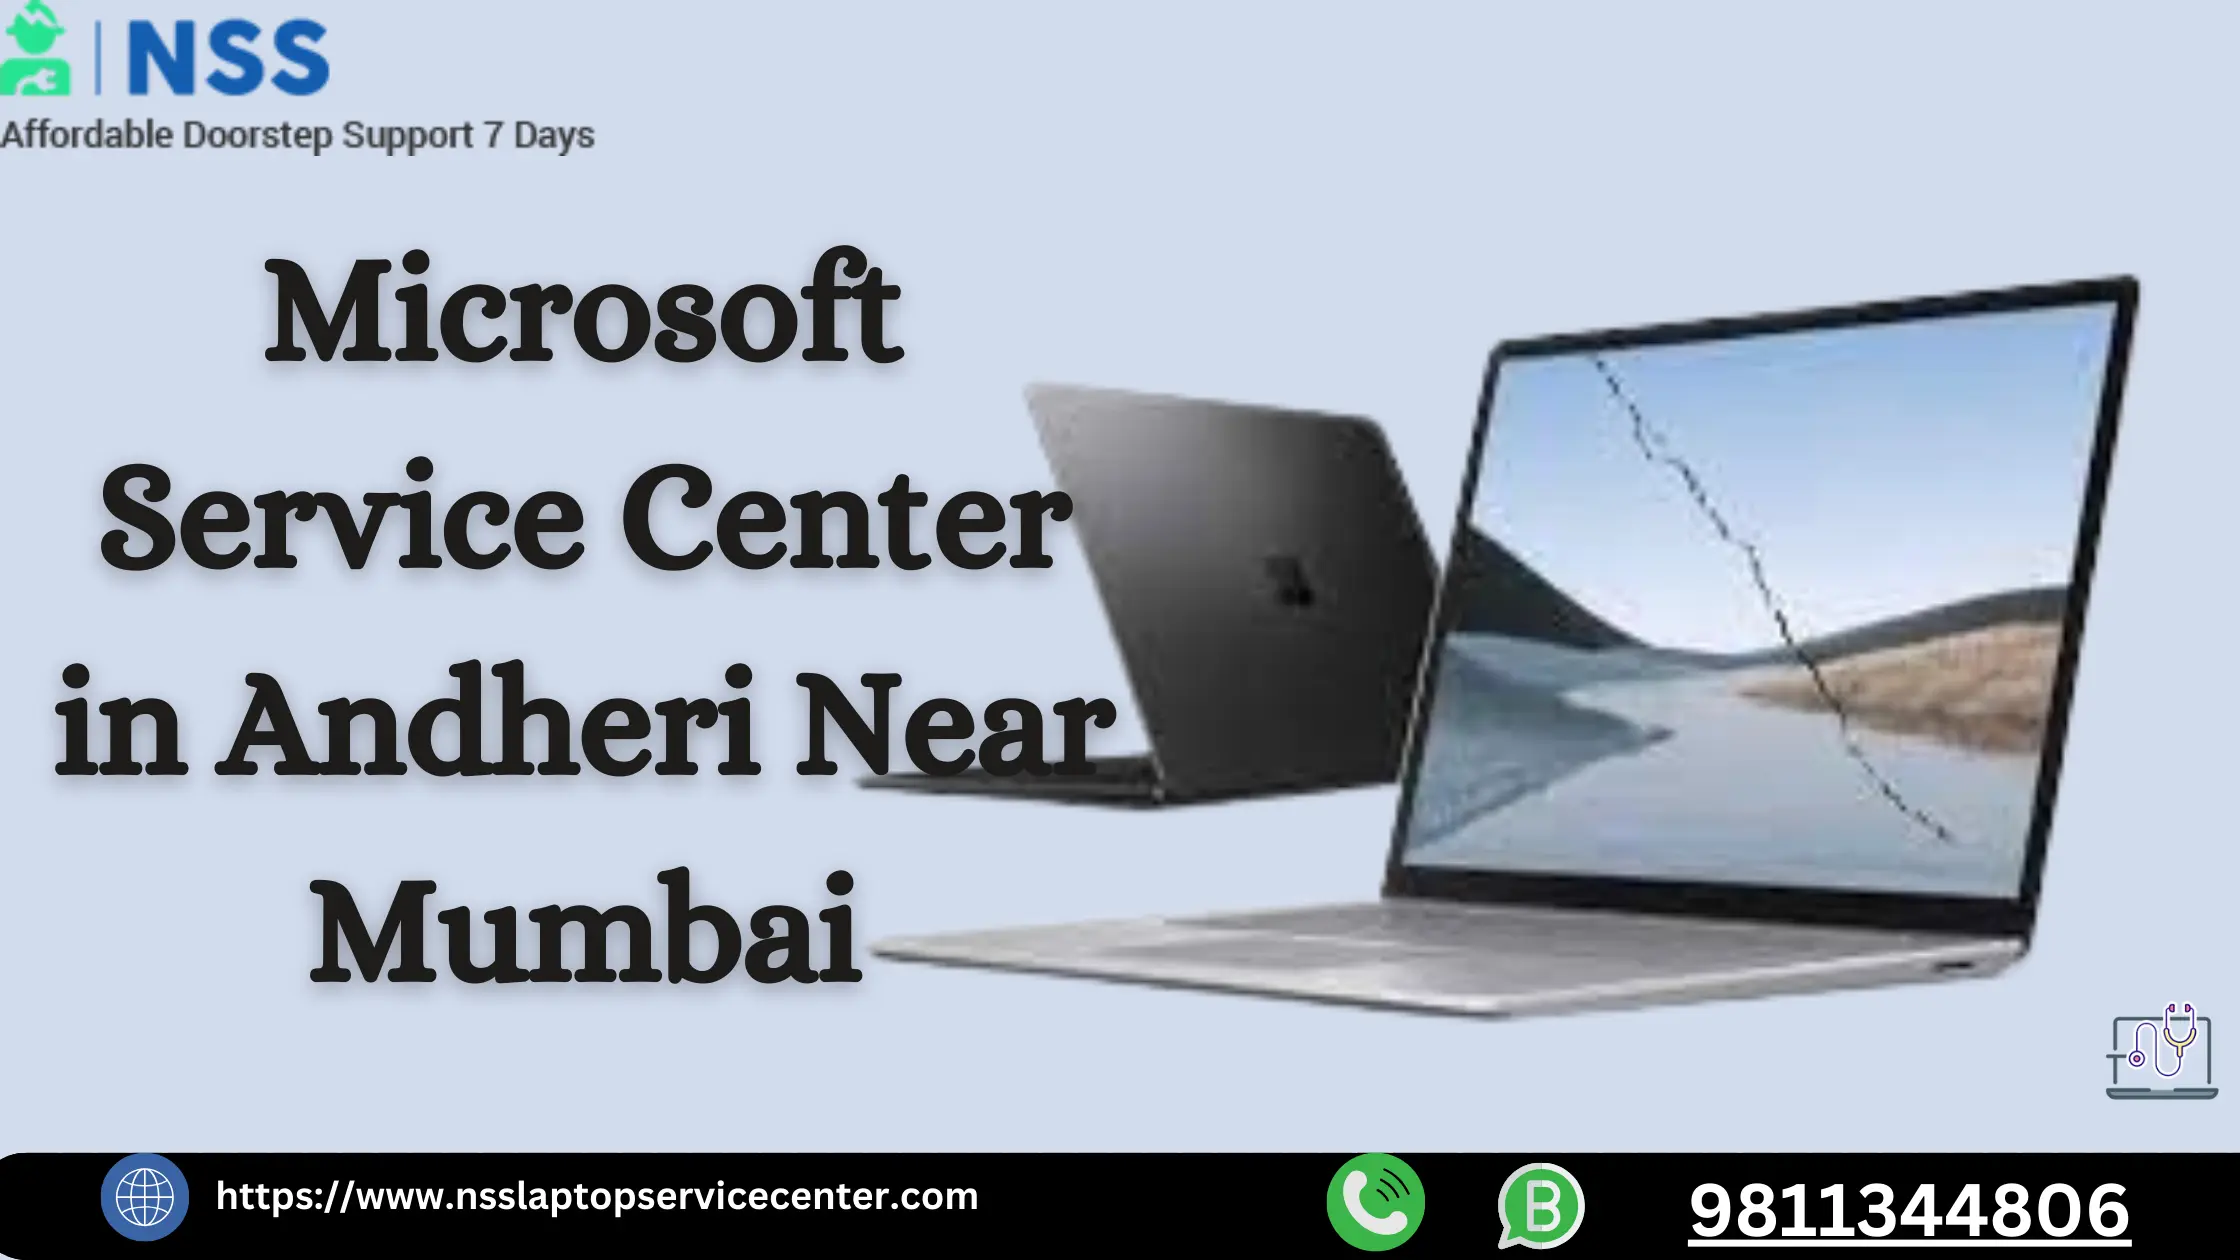 Microsoft Service Center in Andheri Near Mumbai